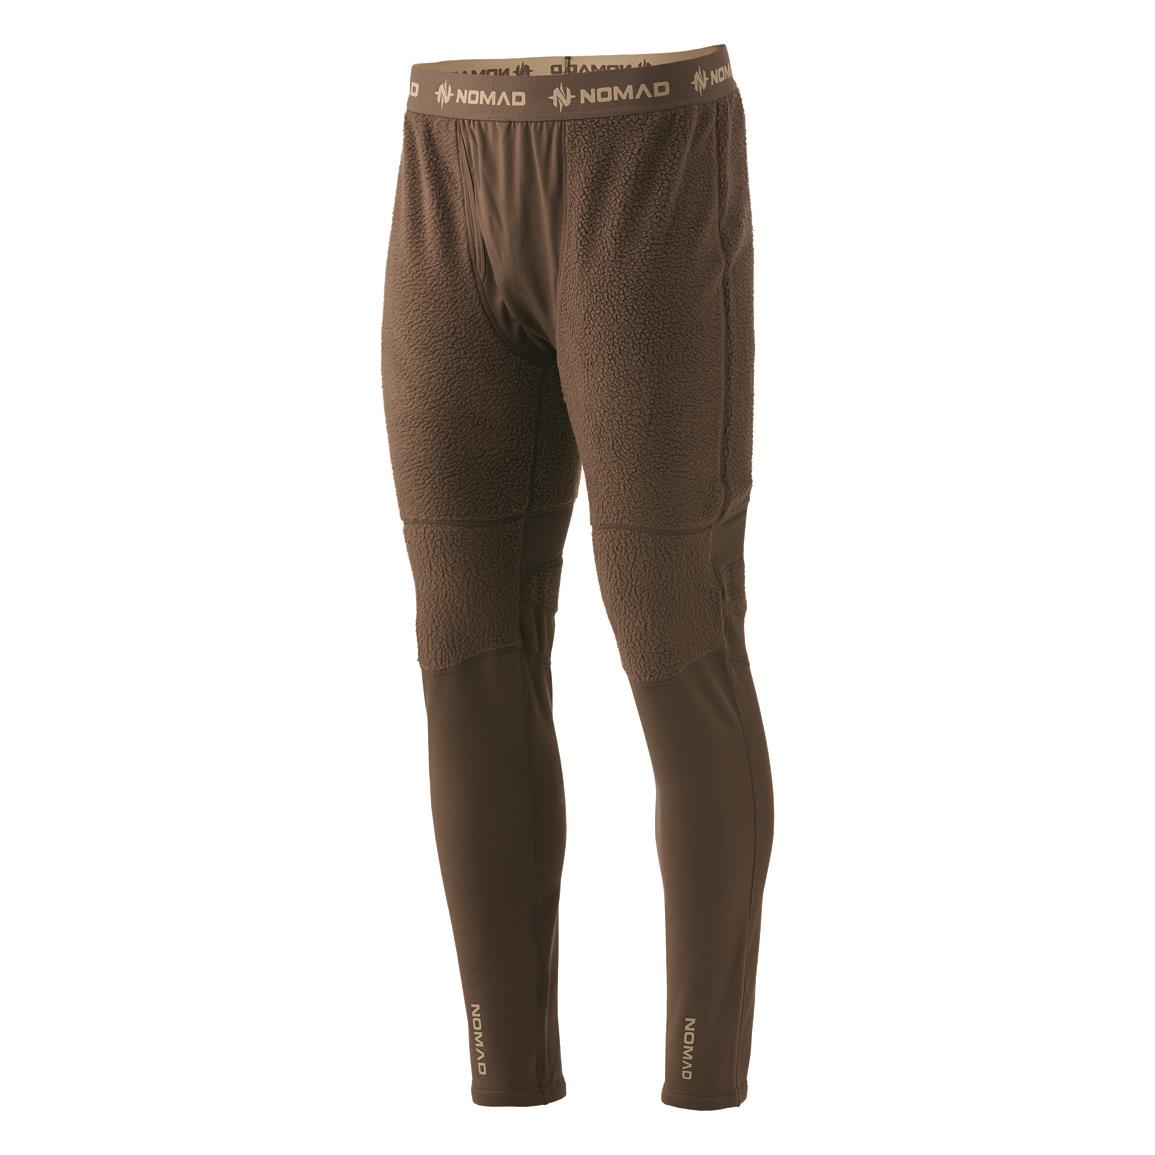 NOMAD Men's Cottonwood Baselayer Pants, Mud